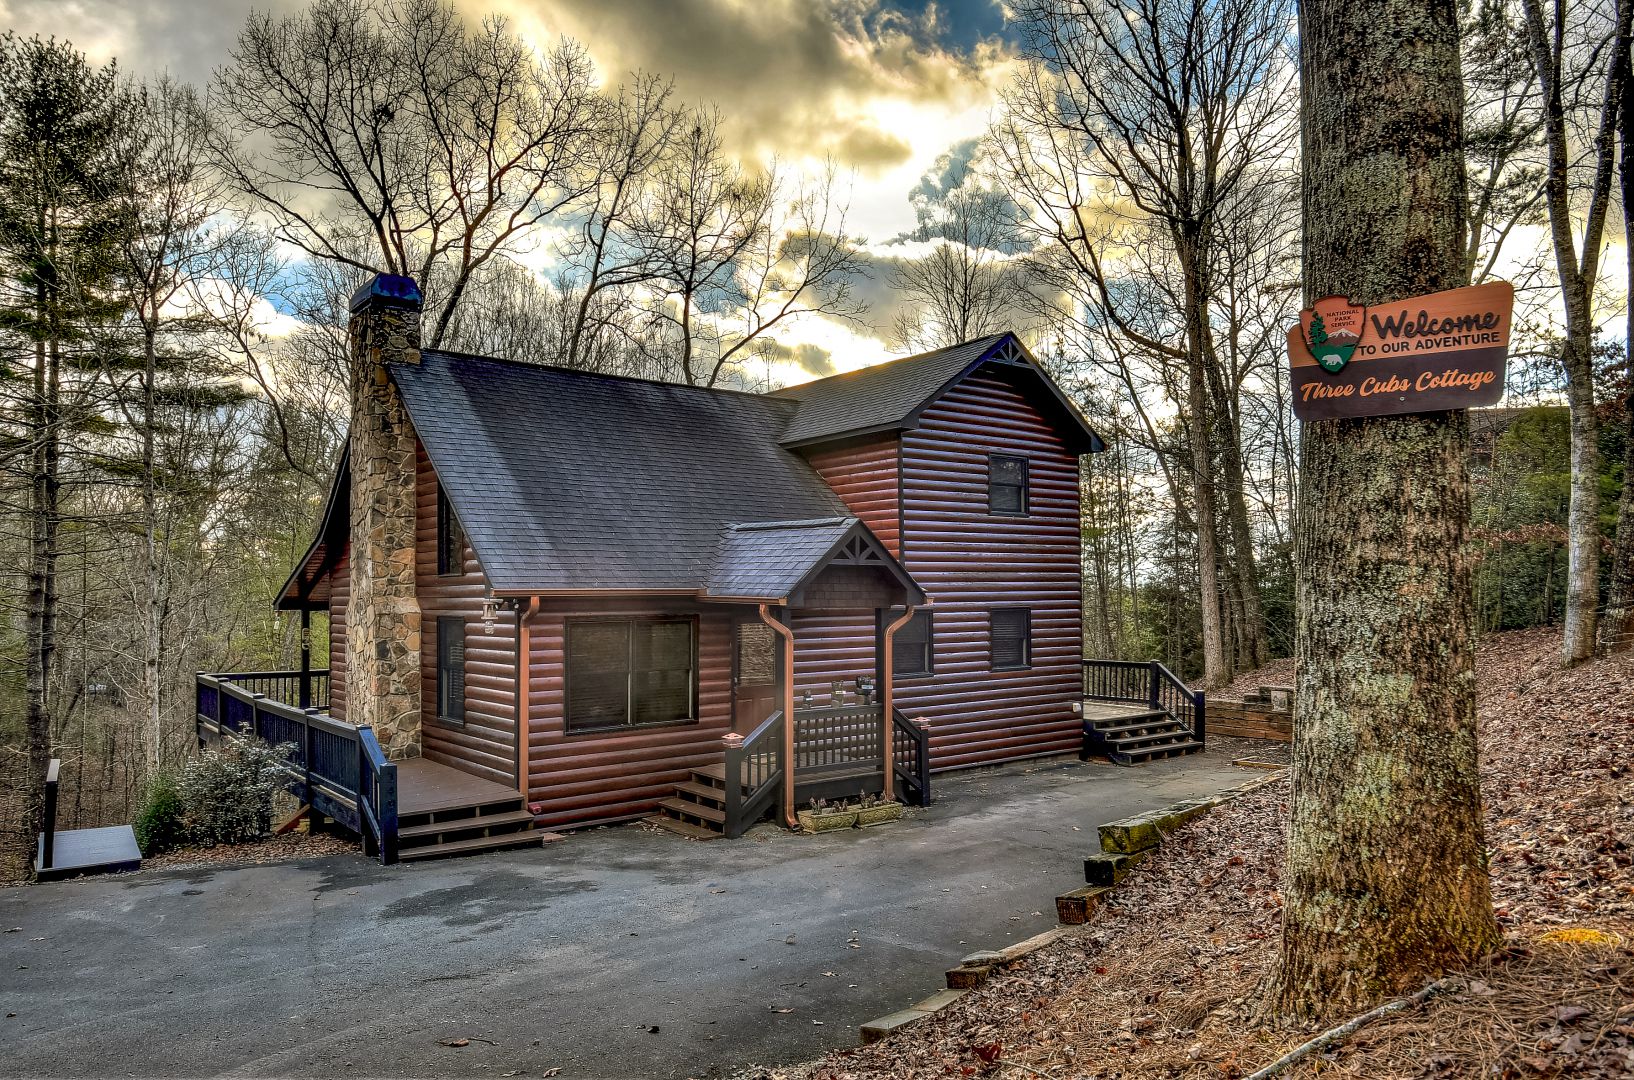 Three Cubs Cottage | North Georgia Cabin Rentals